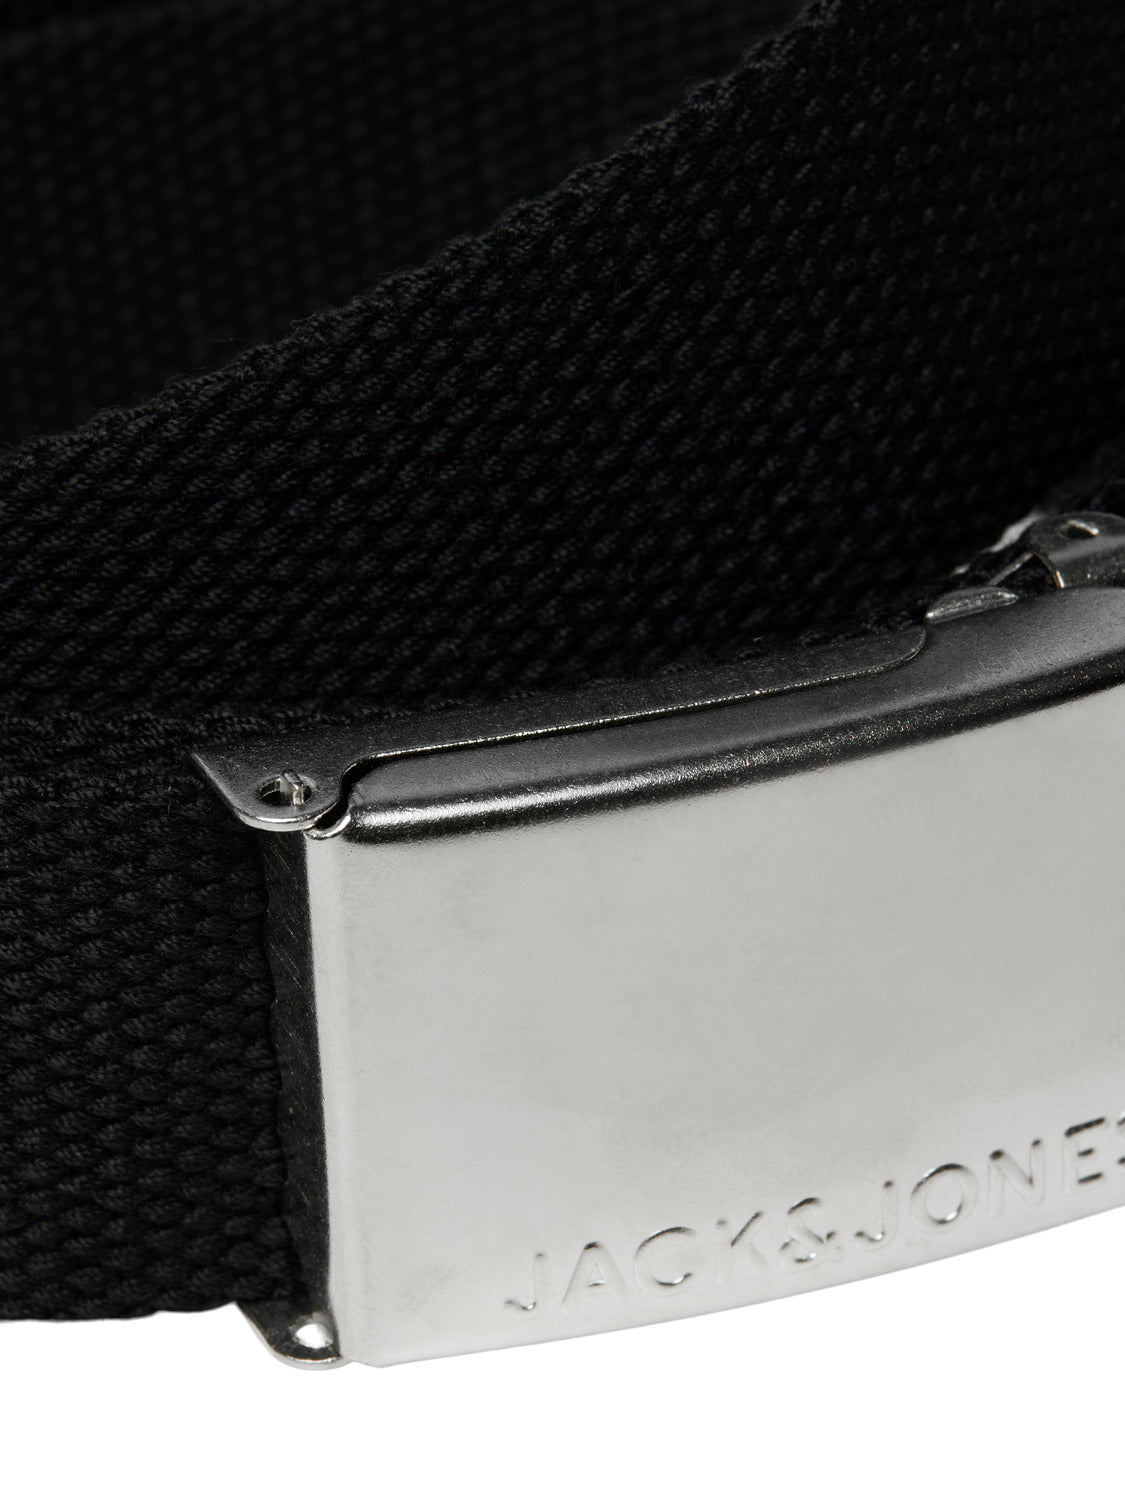 JACLANDON Belt - Black